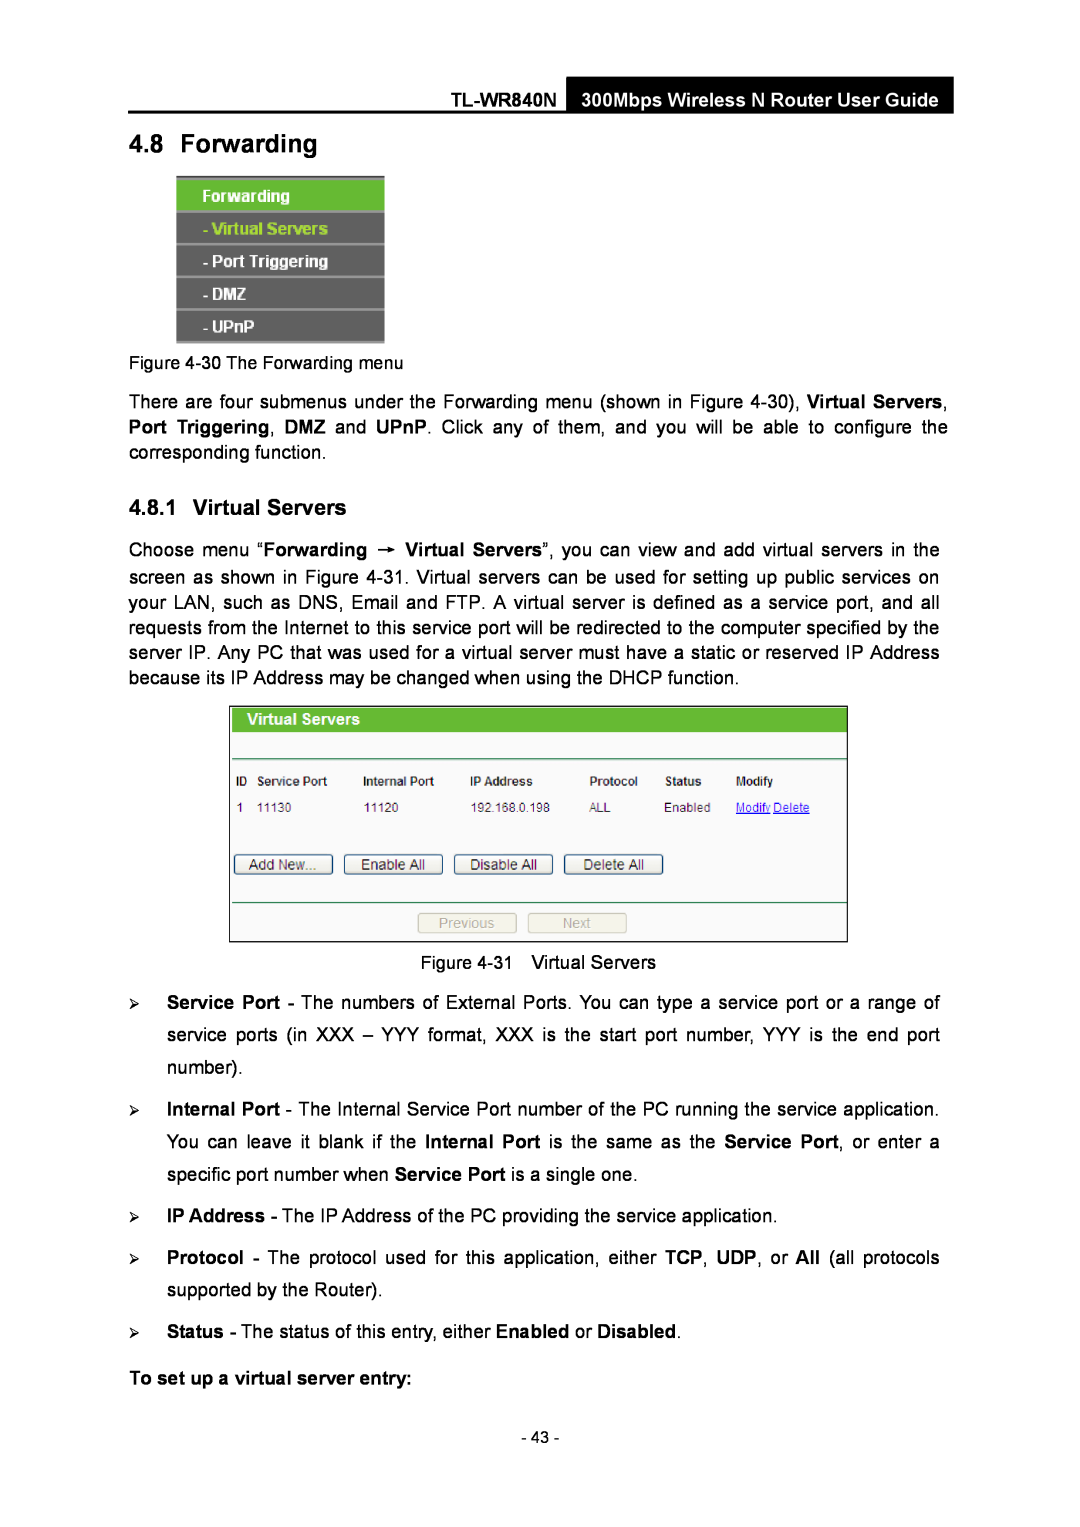 TP-Link TL-WR840N manual Forwarding, Virtual Servers, To set up a virtual server entry 